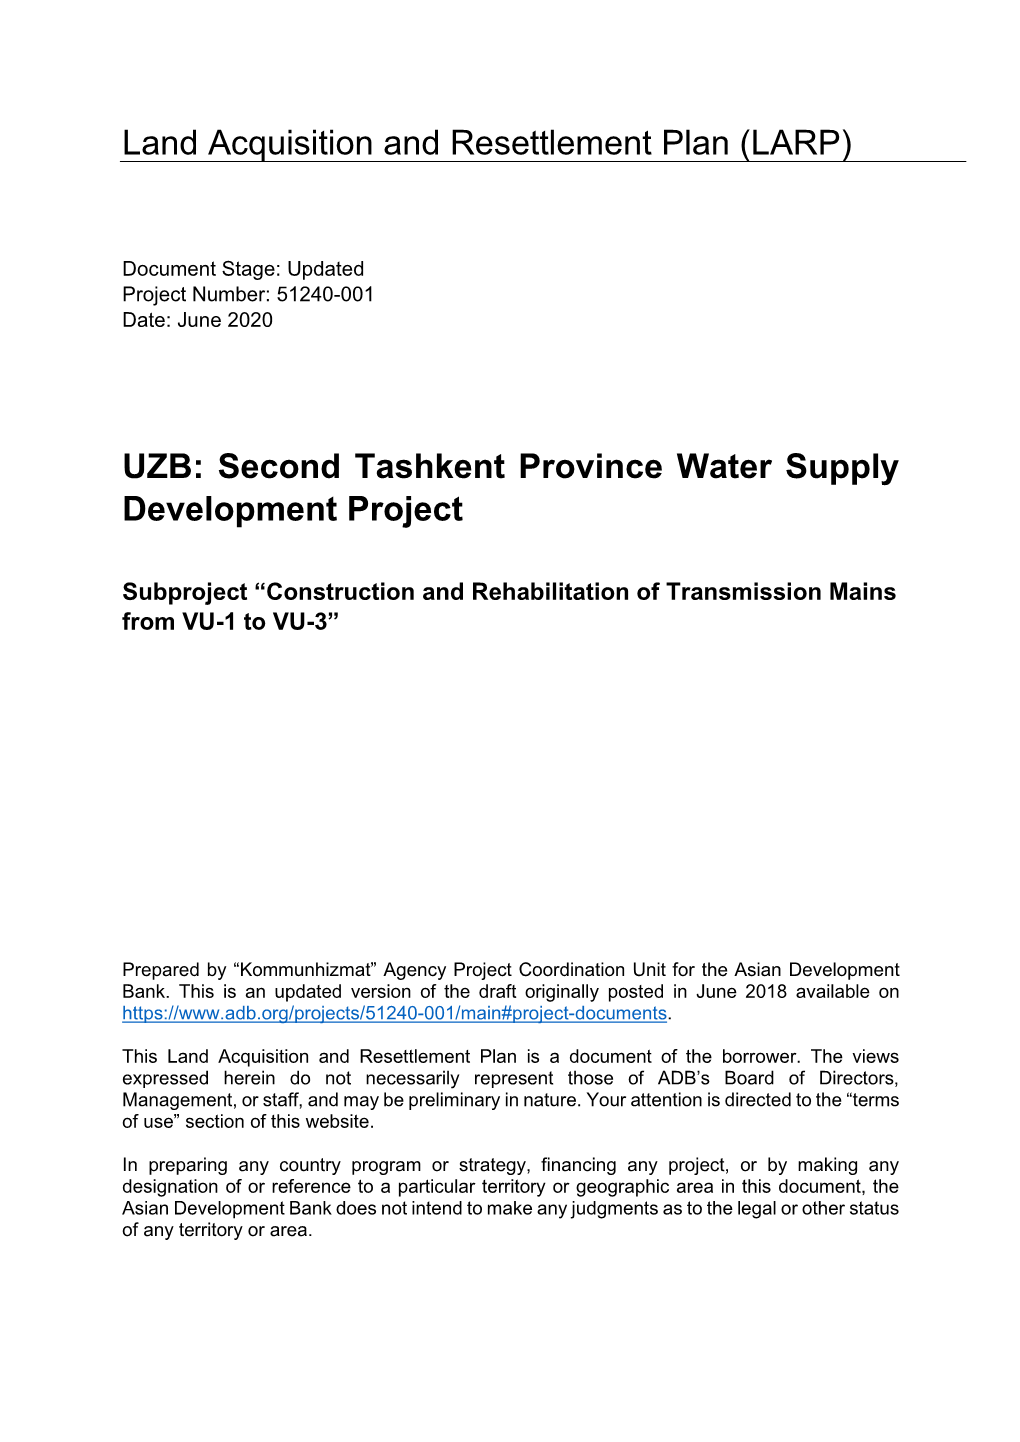 51240-001: Second Tashkent Province Water Supply